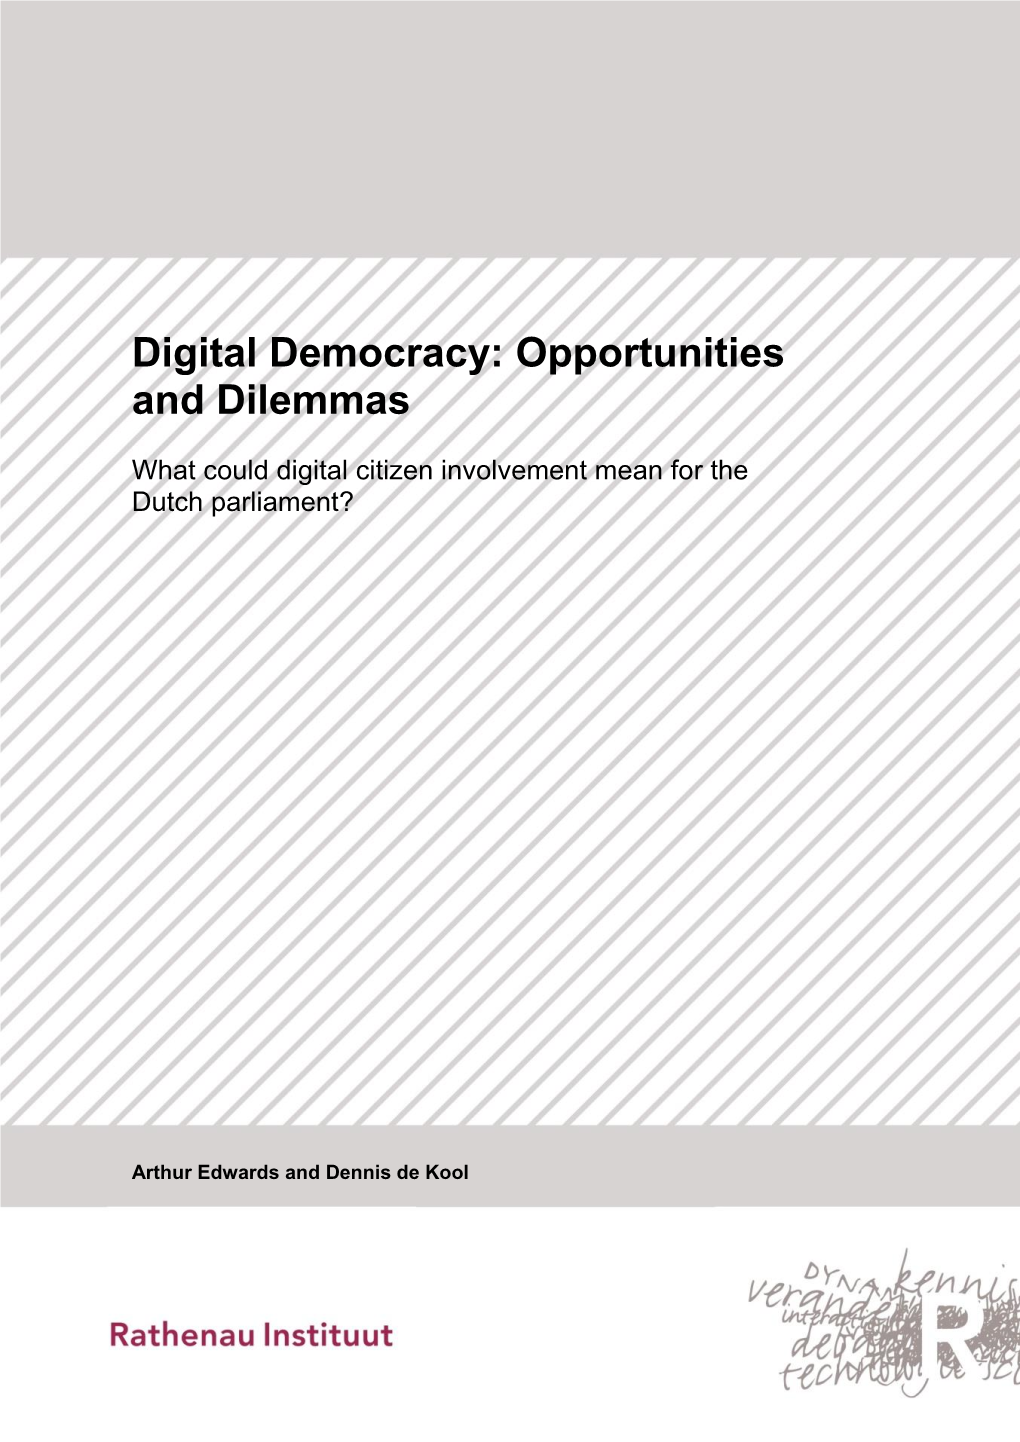 Digital Democracy: Opportunities and Dilemmas